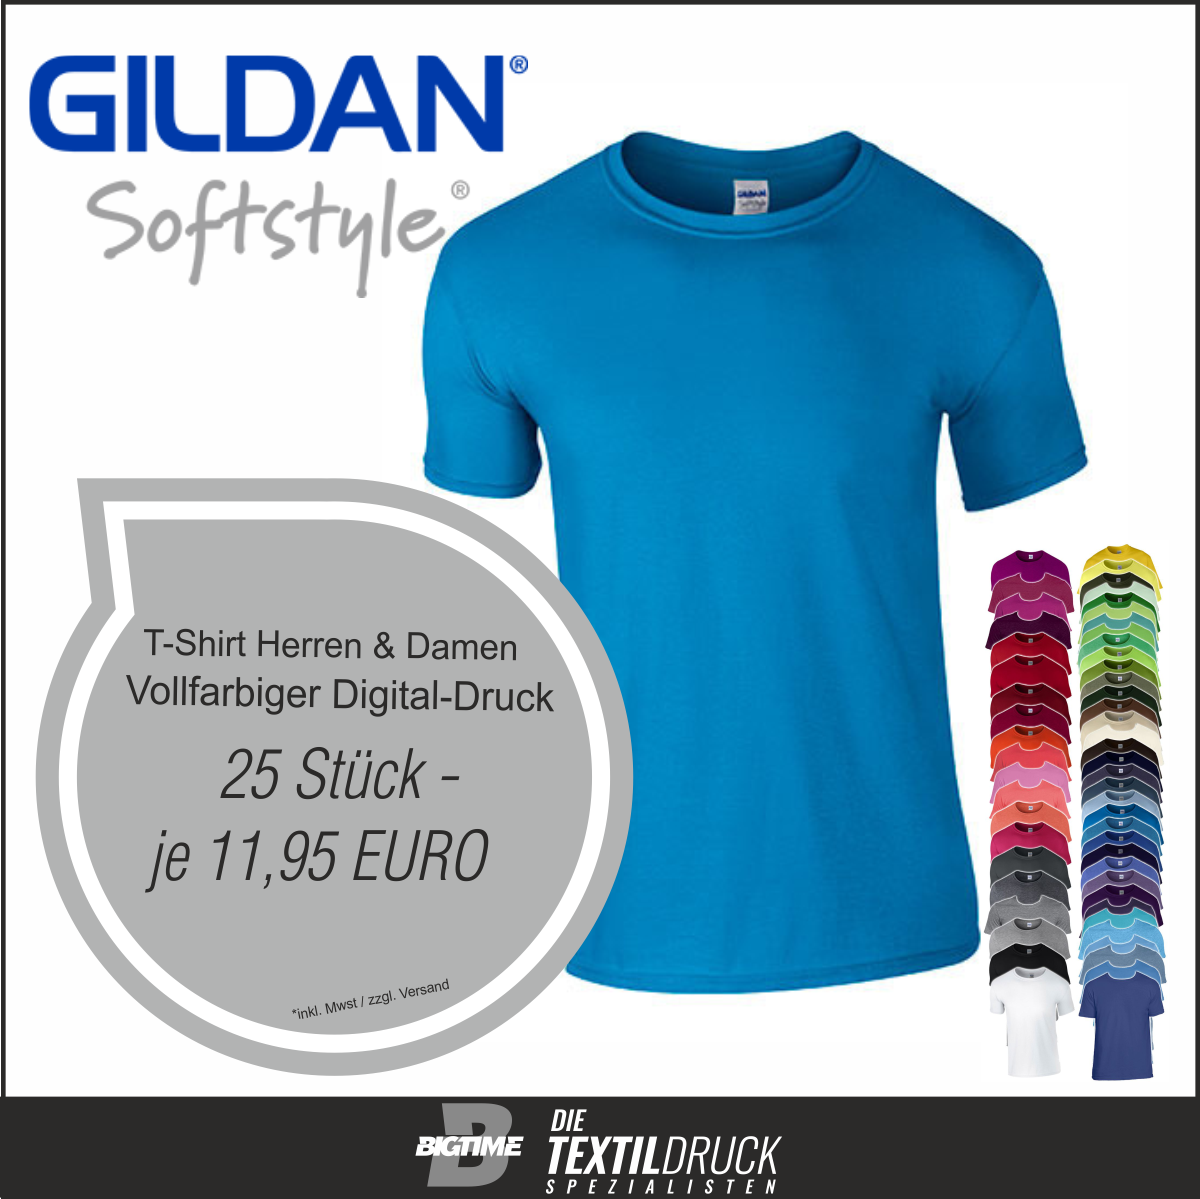 Gildan Softstyle T-Shirts farbig einseitig, vollfarbiger Druck / 25 Stück